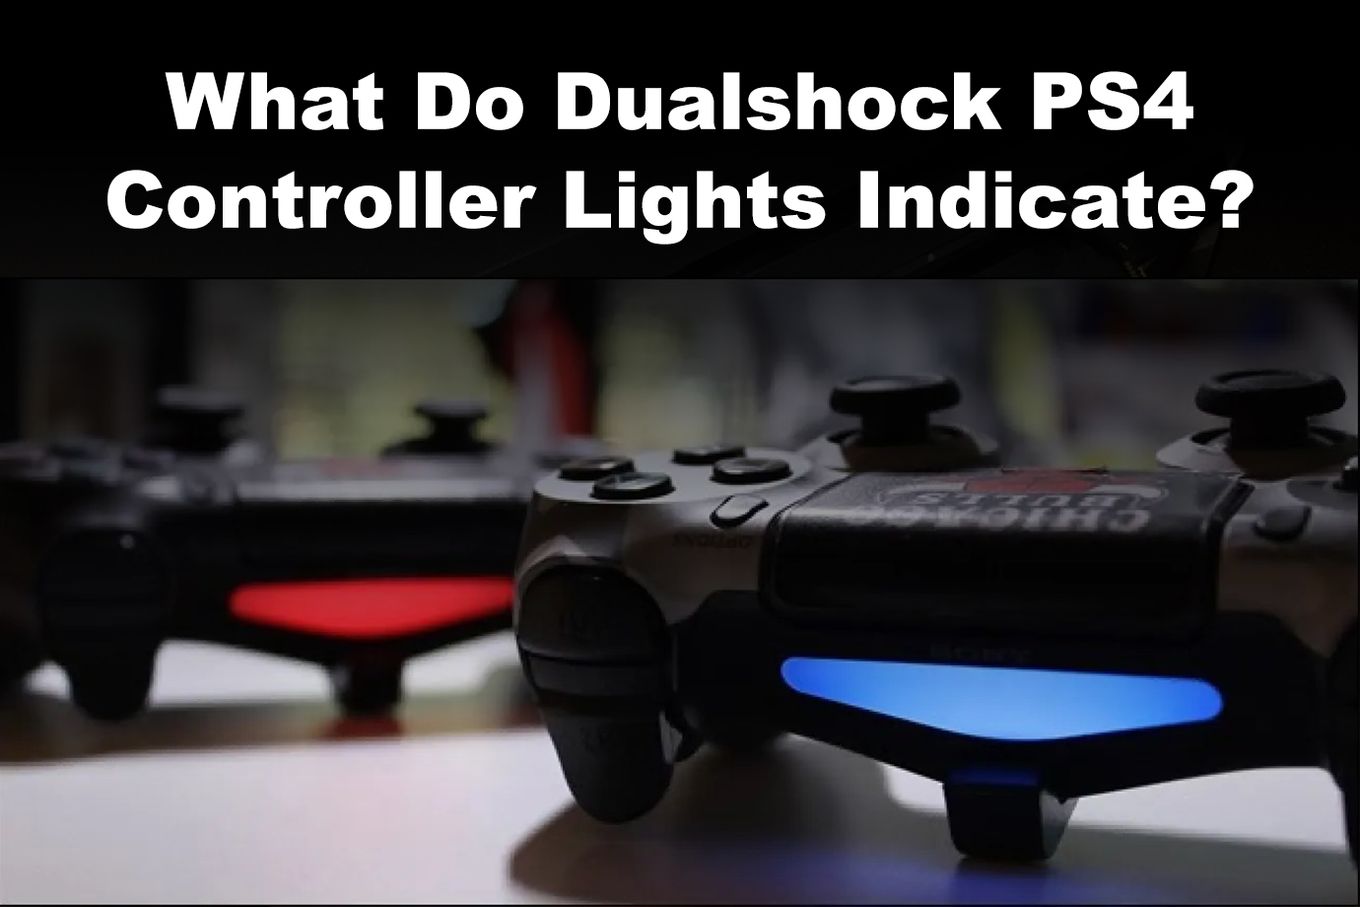 A DualShock 4’s light indicator turning red